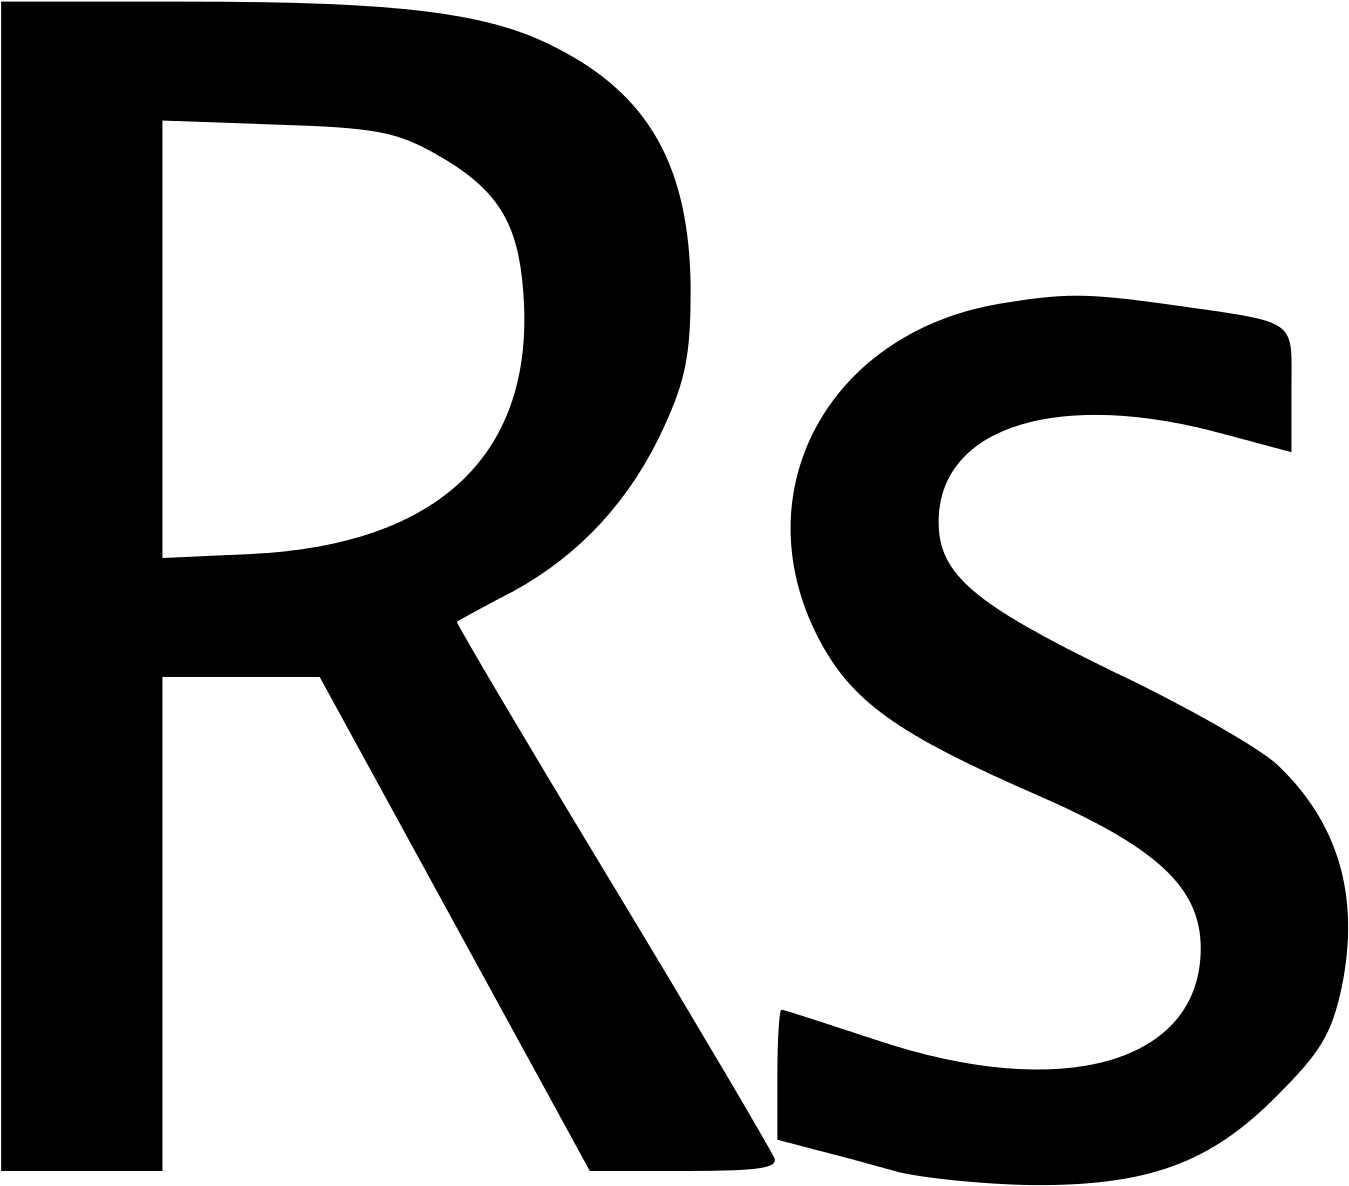 Open - Pakistani Rupee Symbol (2000x1742)